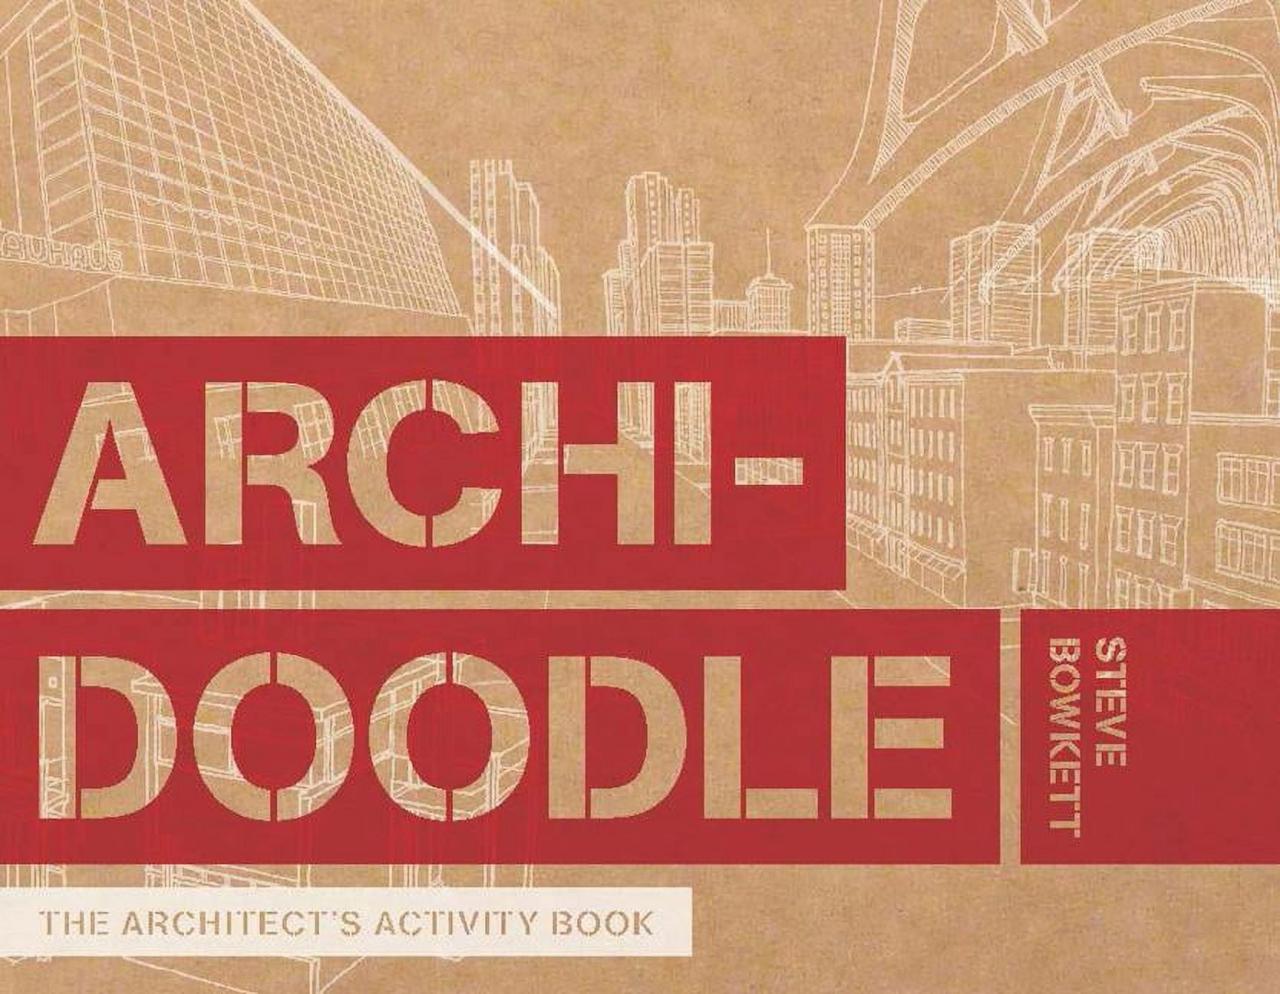 Archidoodle city an architect's activity book